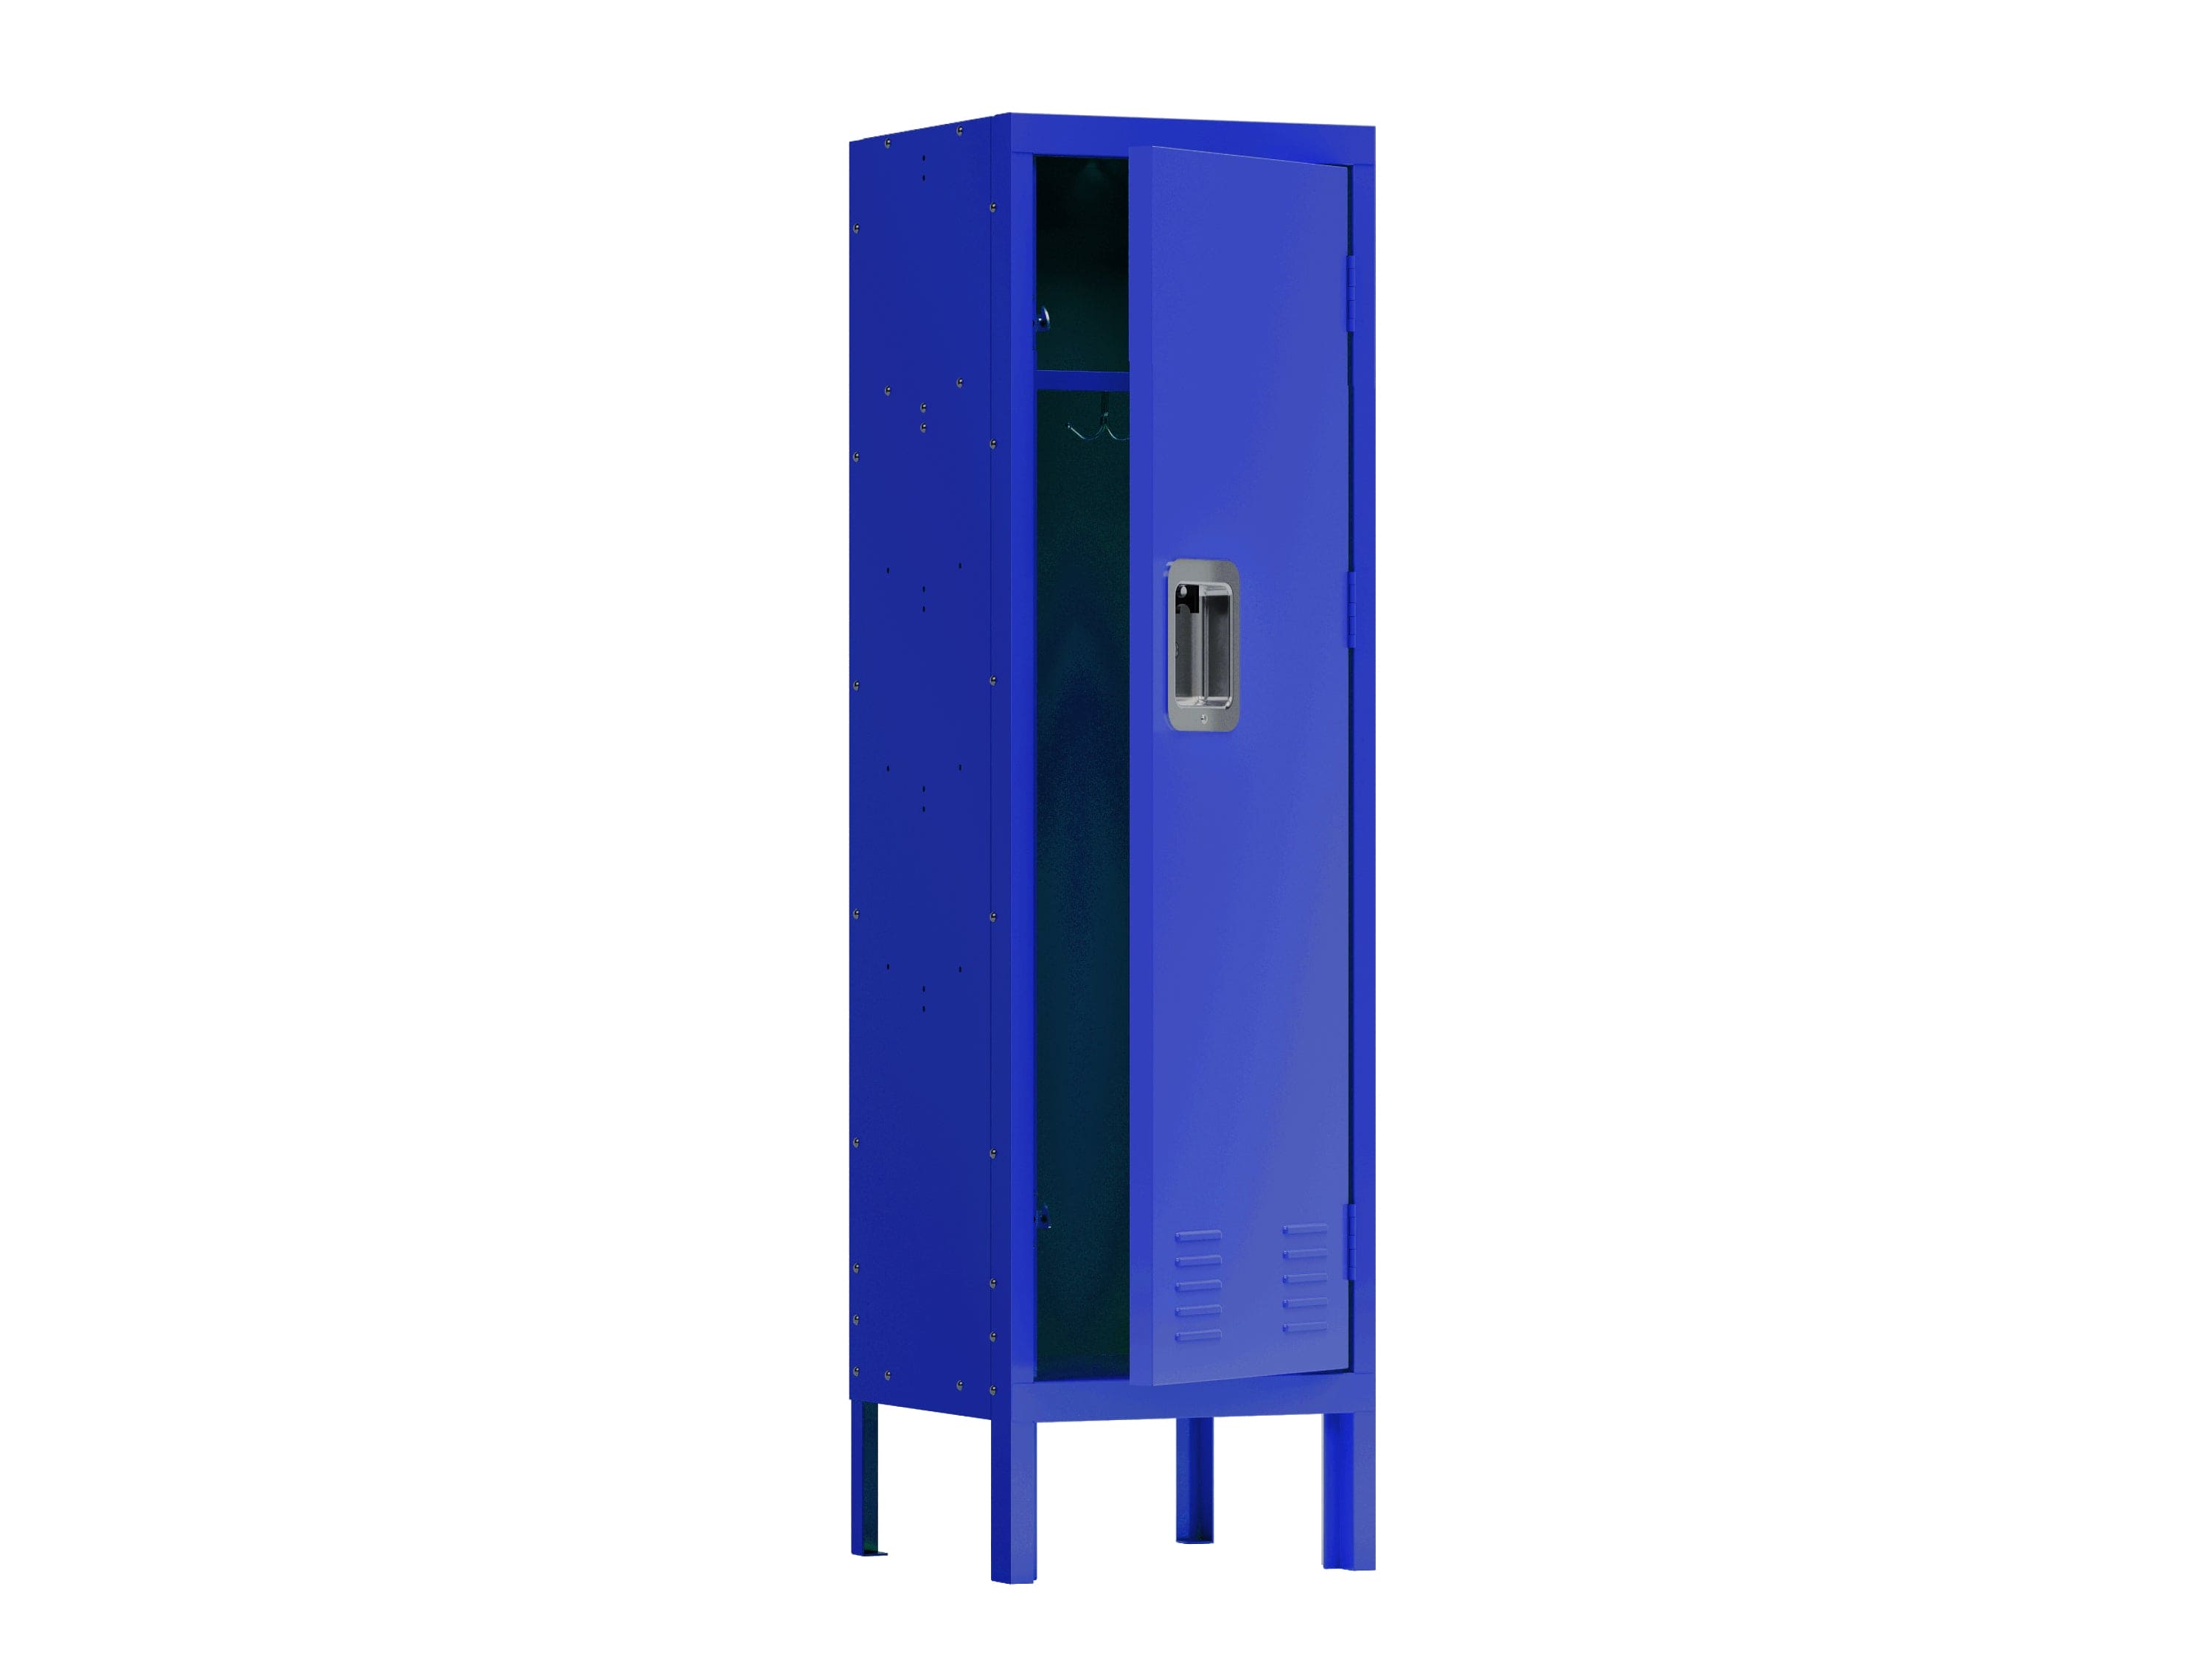 1 Door Tall Single Metal Locker-Retro Style Storage Cabinet--Industrial Furniture--For Living Room/Bedroom/Storage Room/Gym/School--Blue